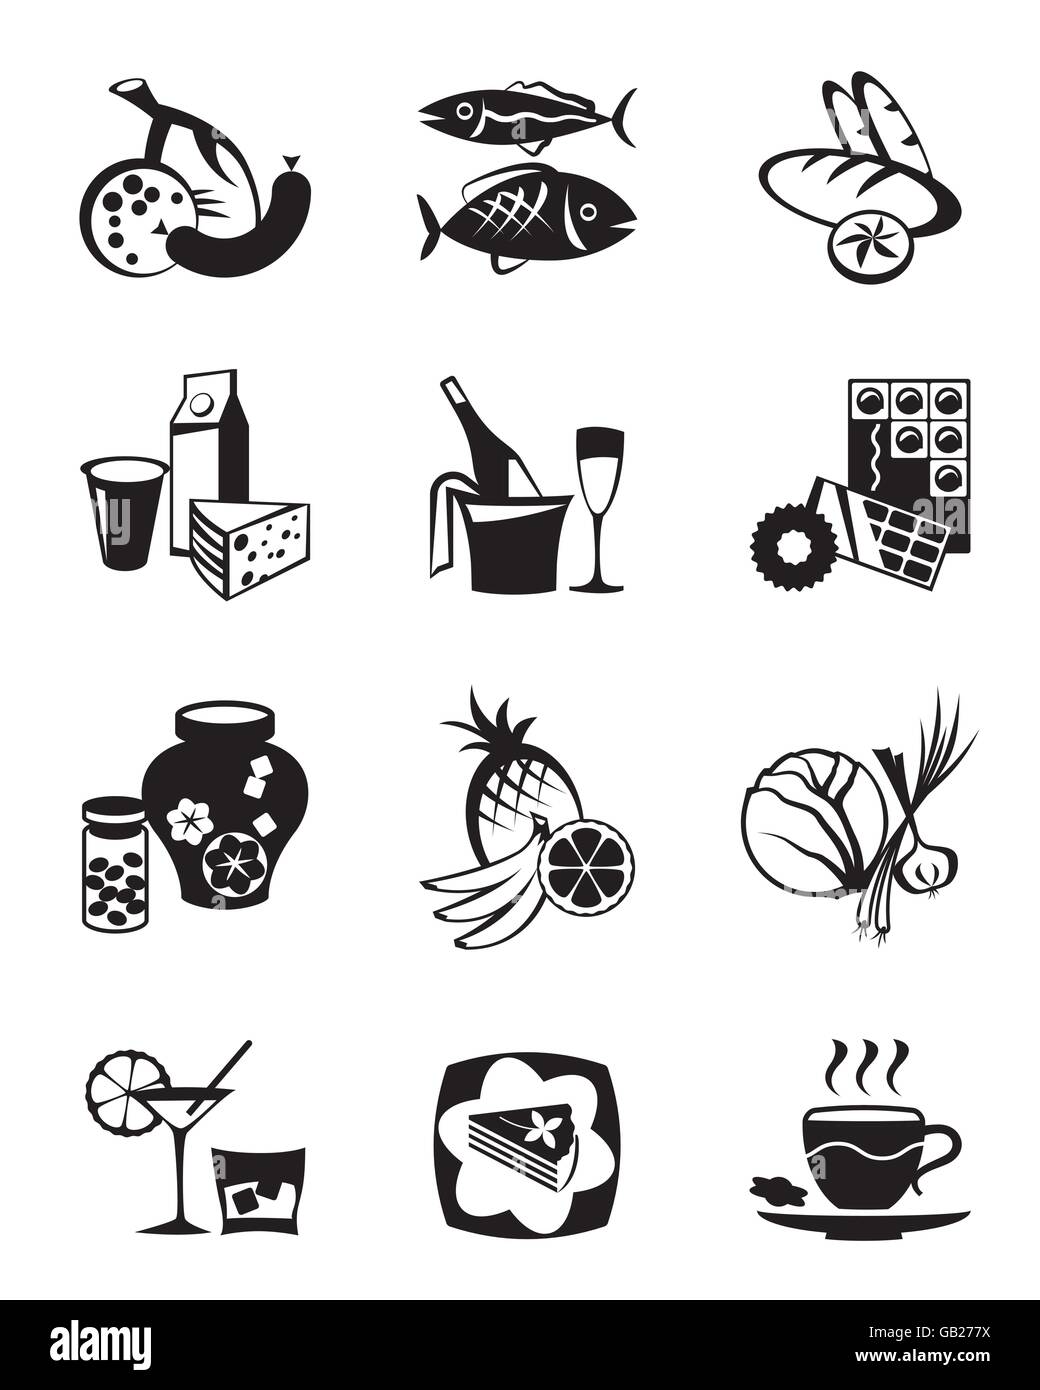 Lebensmittelgeschäft und Süßwaren Icons Set - Vektor-illustration Stock Vektor